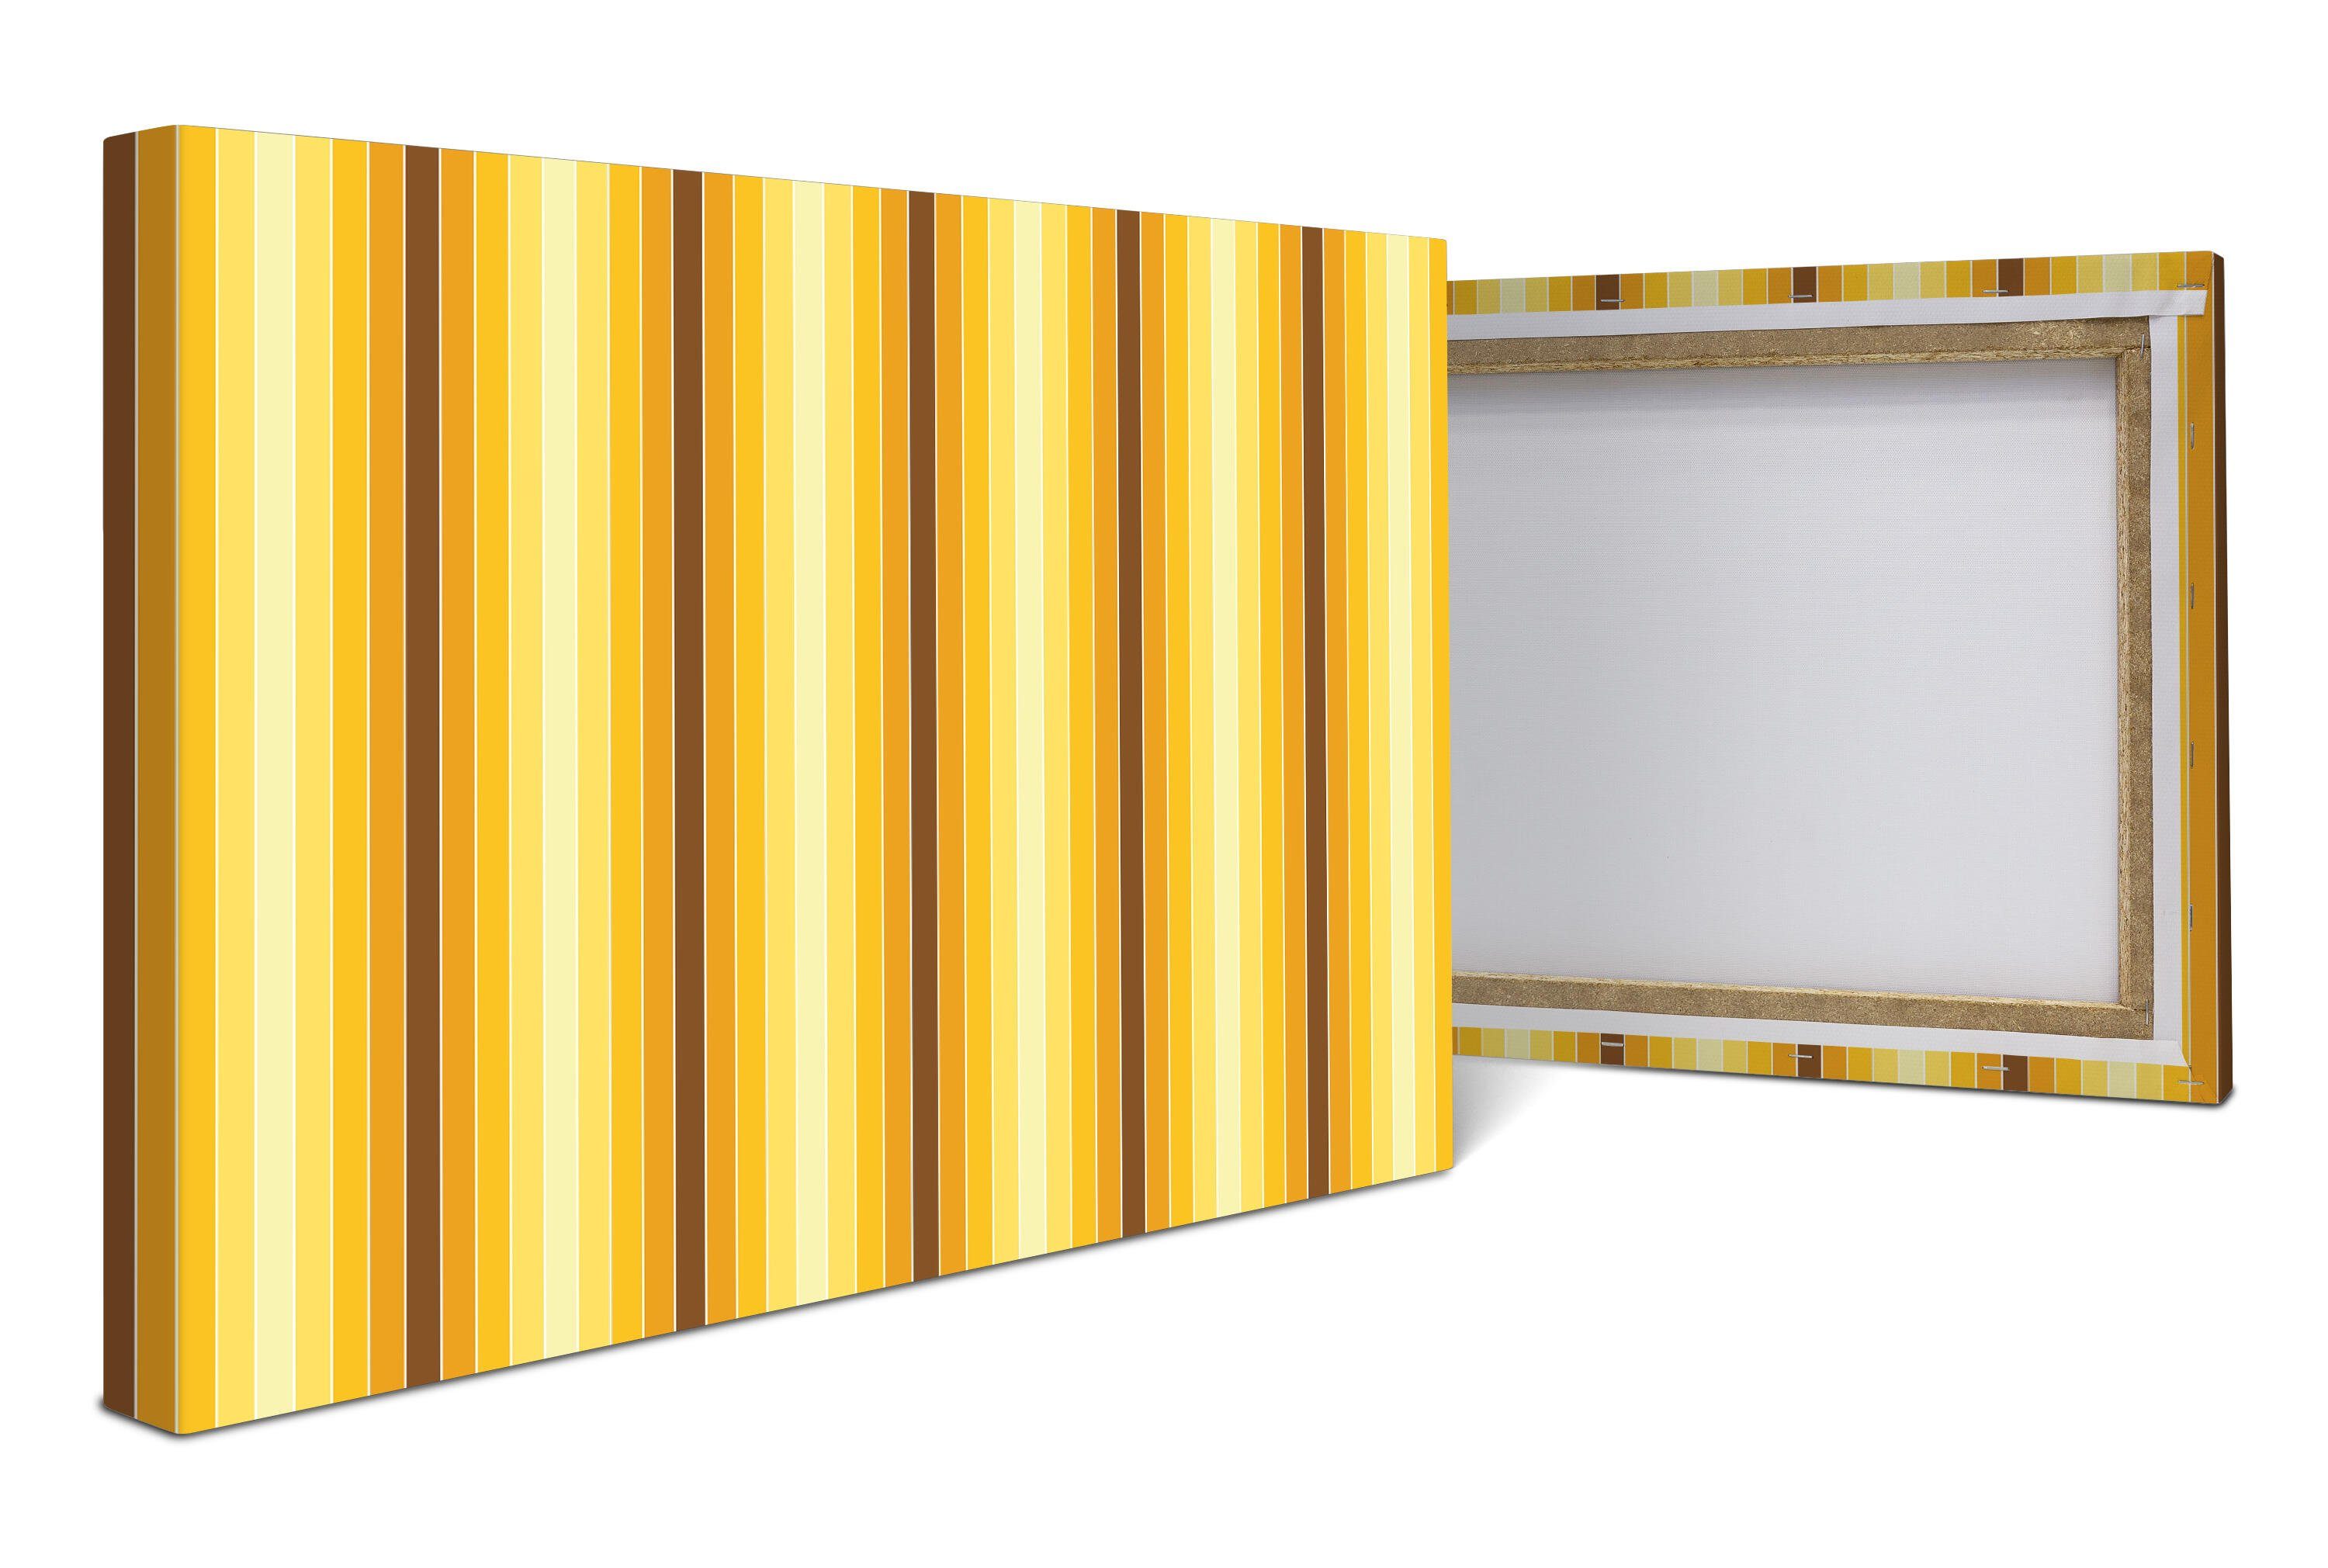 wandmotiv24 Leinwandbild Gelb Muster, Abstrakt (1 St), Wandbild, Wanddeko, Leinwandbilder in versch. Größen